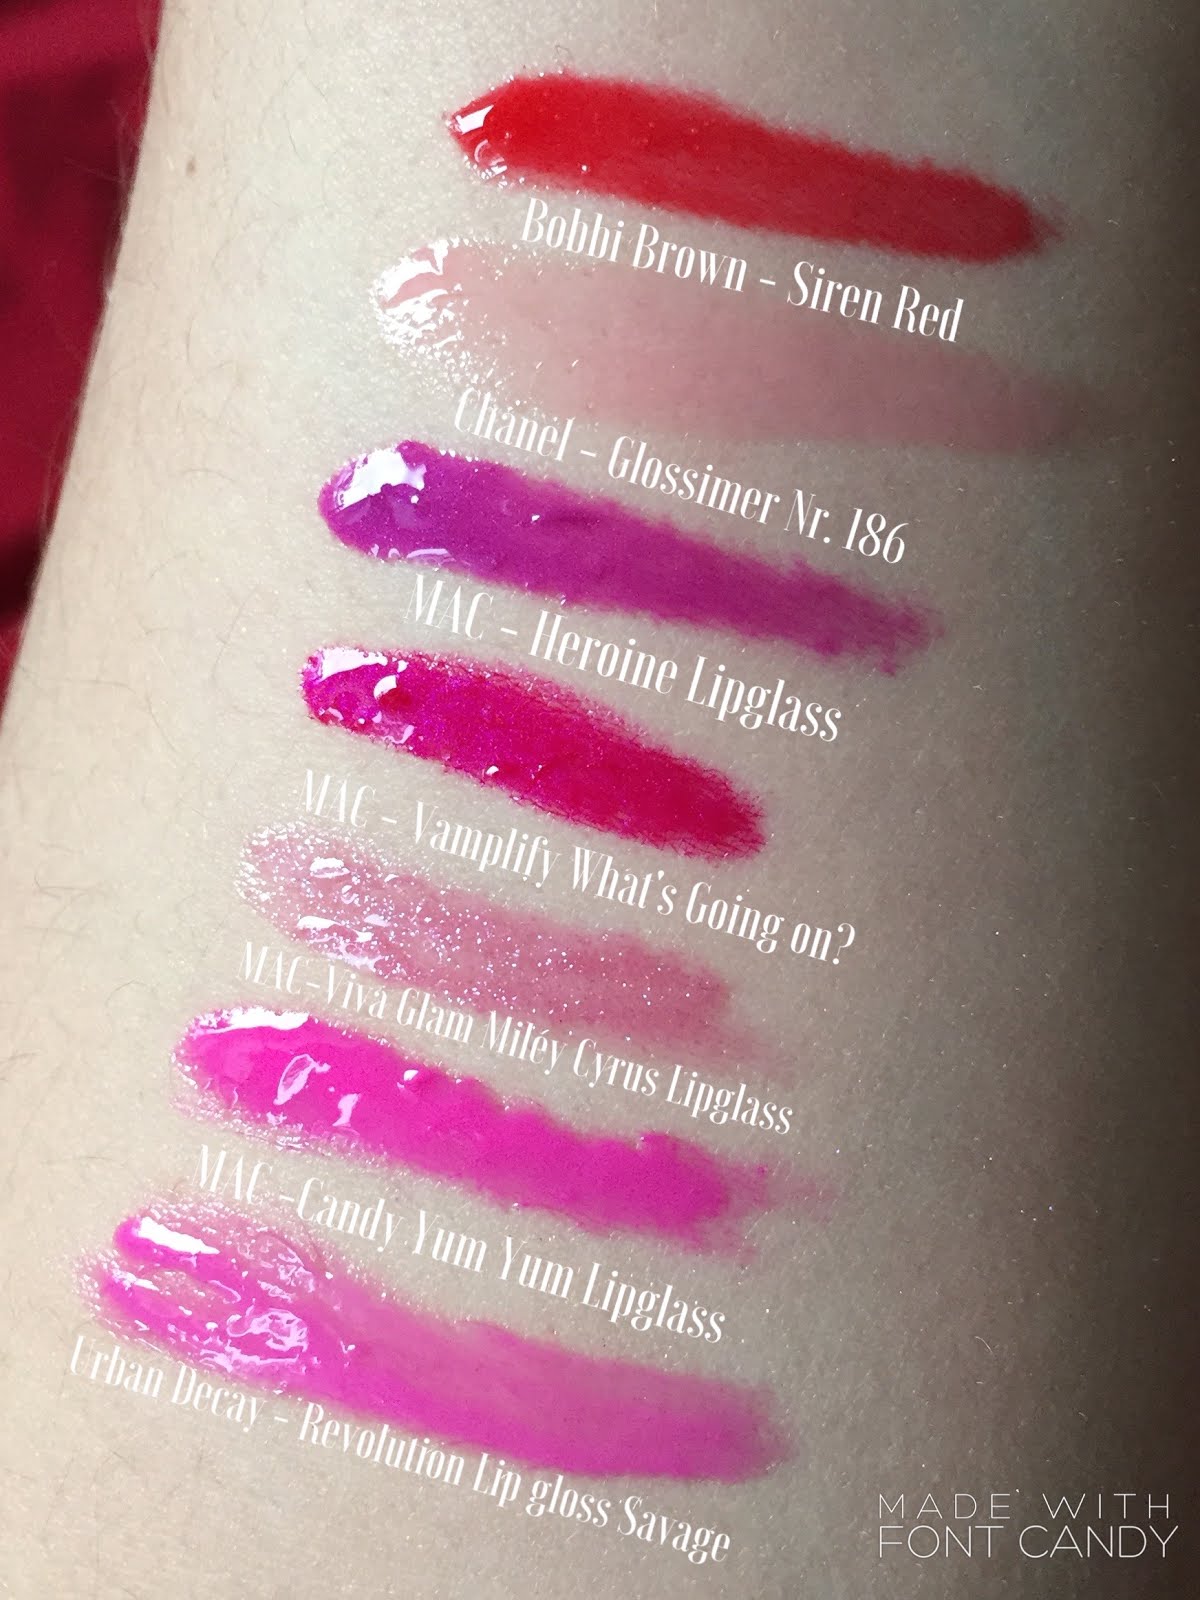 CoverGirl Exhibitionist Cream Lipstick, 480 Pink Sherbet